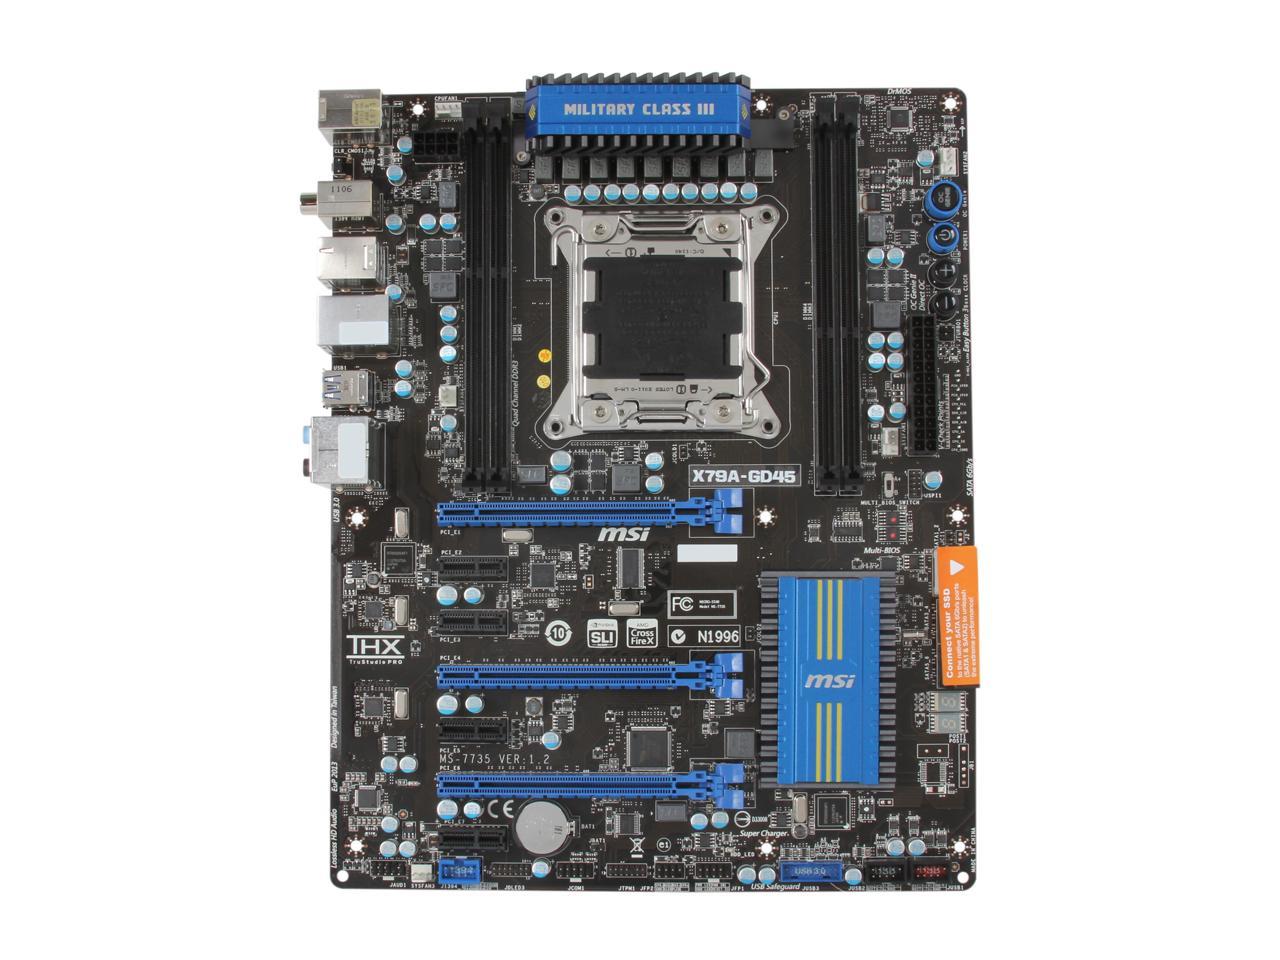 MSI X79A-GD45 LGA 2011 ATX Intel Motherboard with UEFI BIOS - Newegg.com